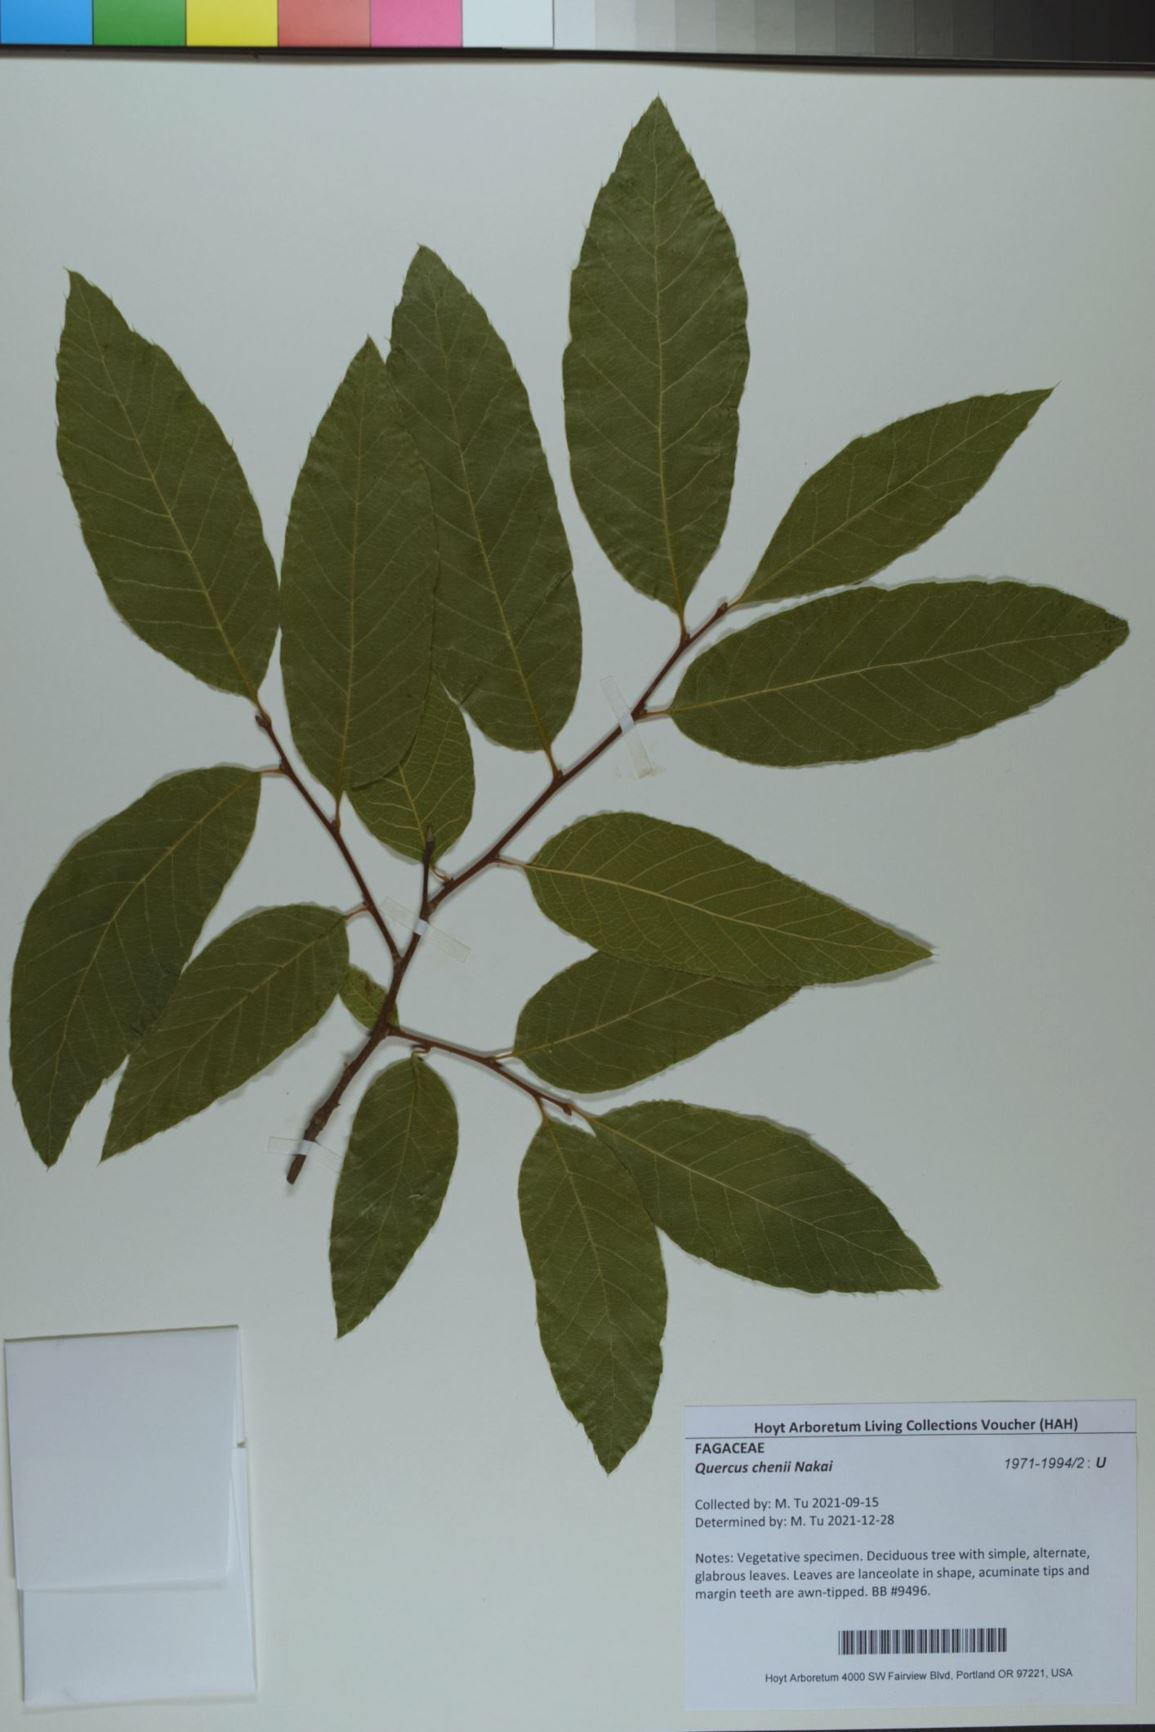 Quercus chenii - Chenii Oak, Chenii Oak